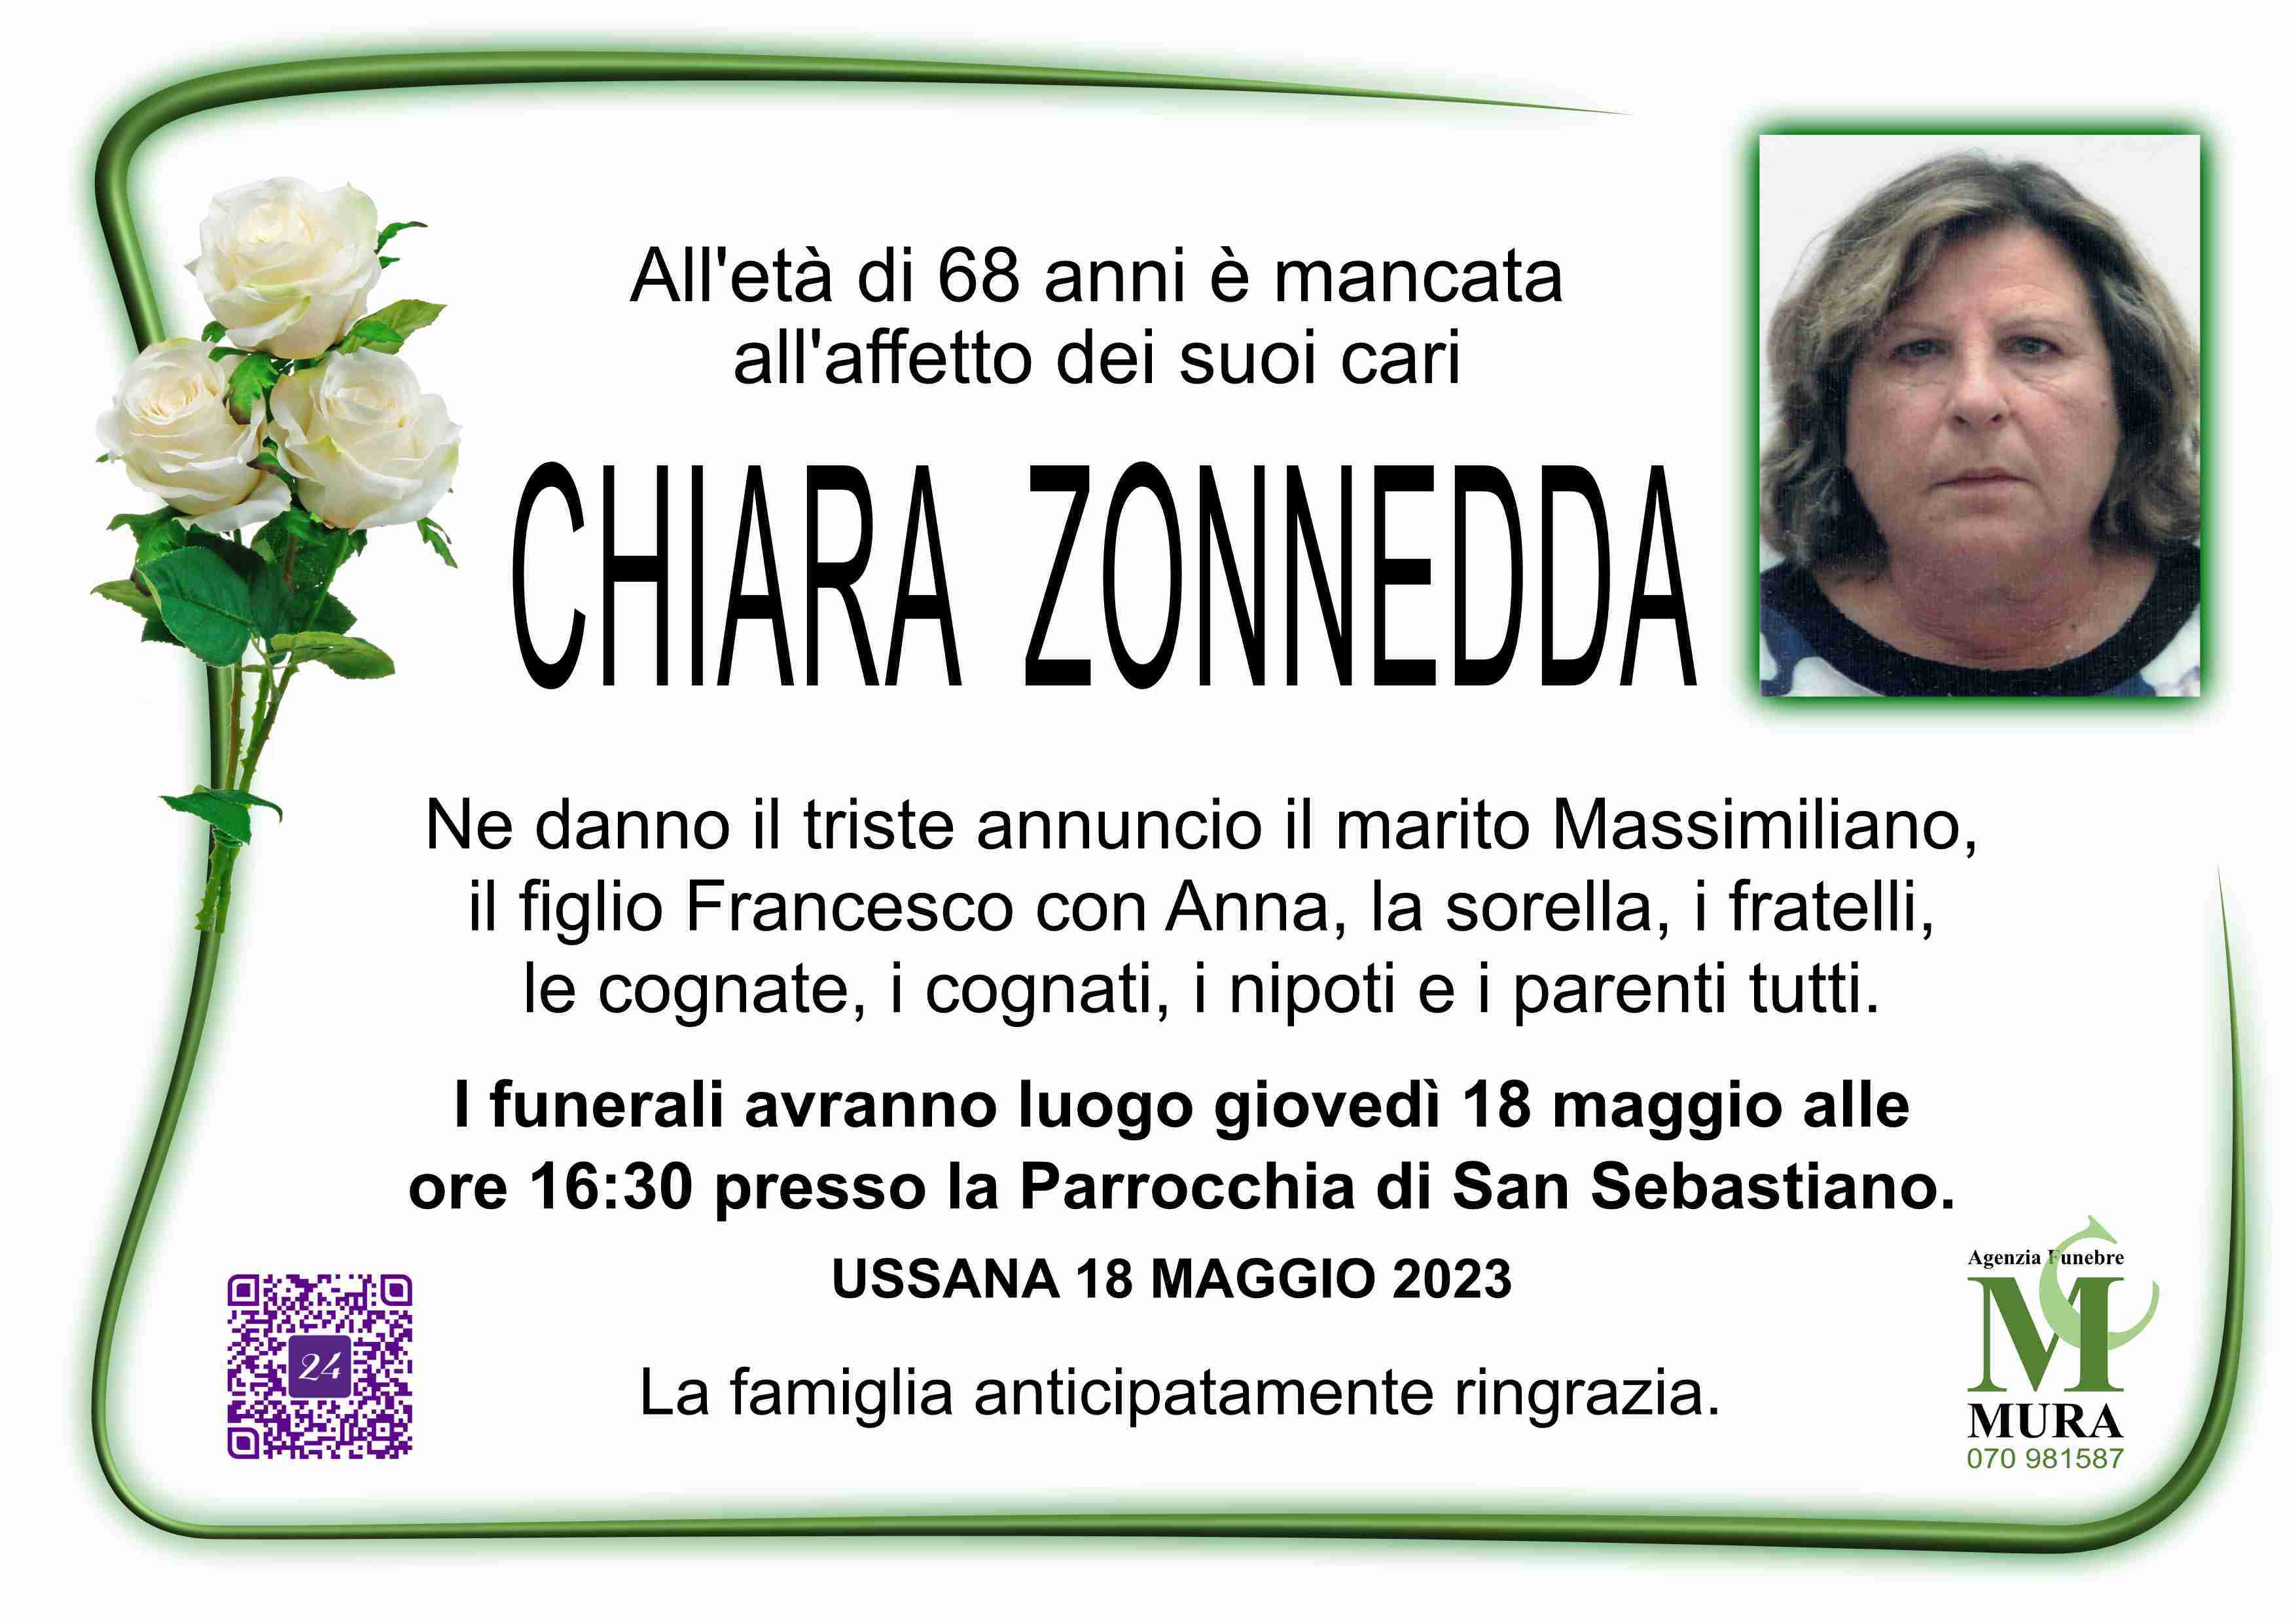 Chiara Zonnedda